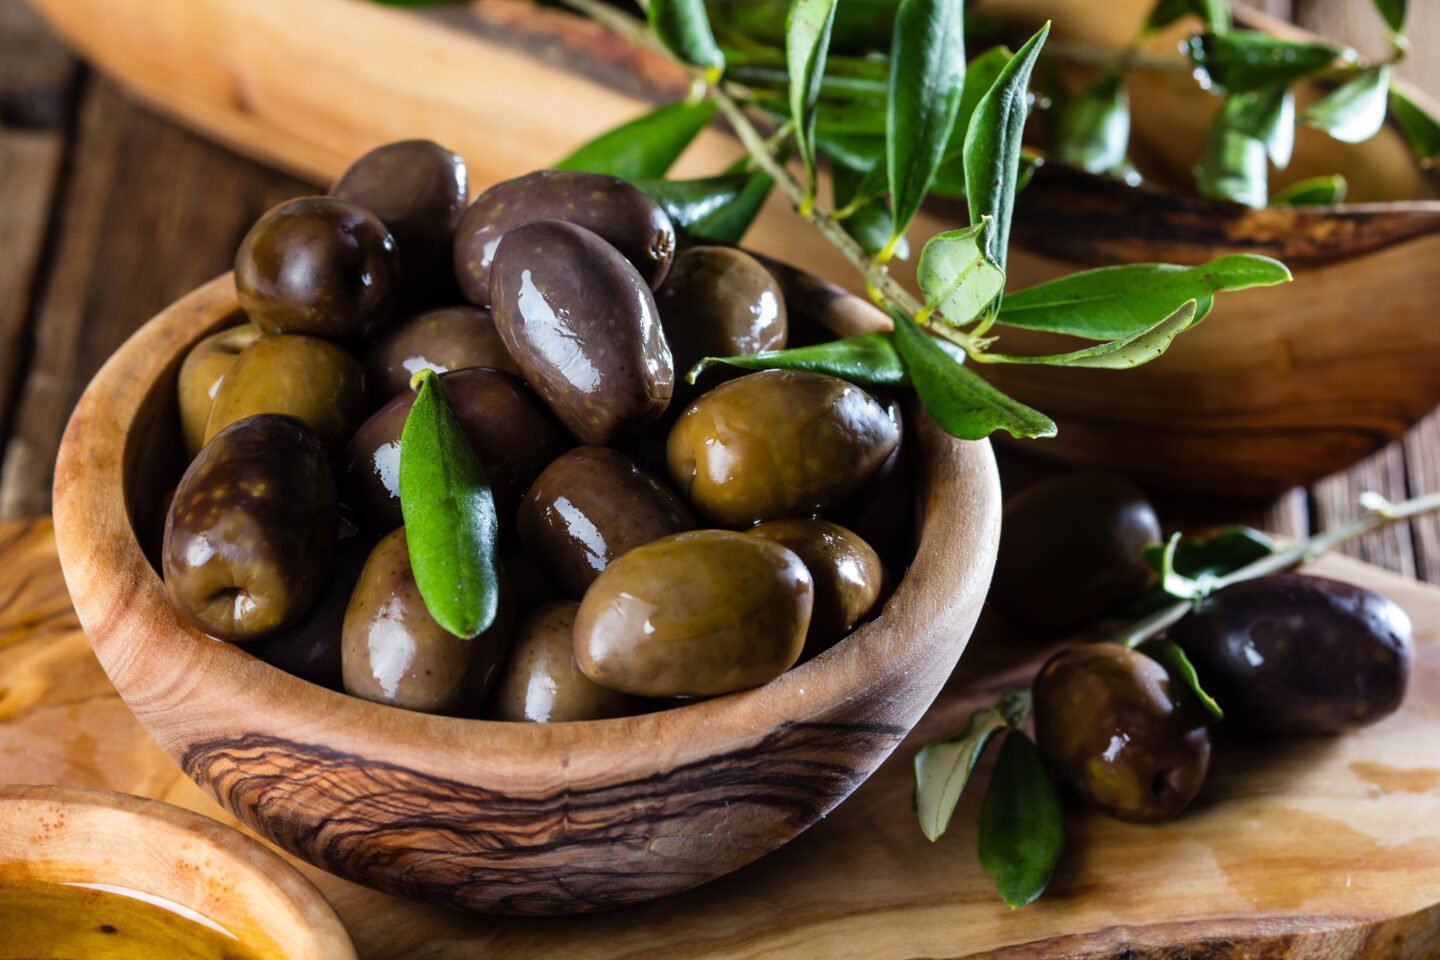 Olives and olive oil in olive wooden bowls, olive tree branch